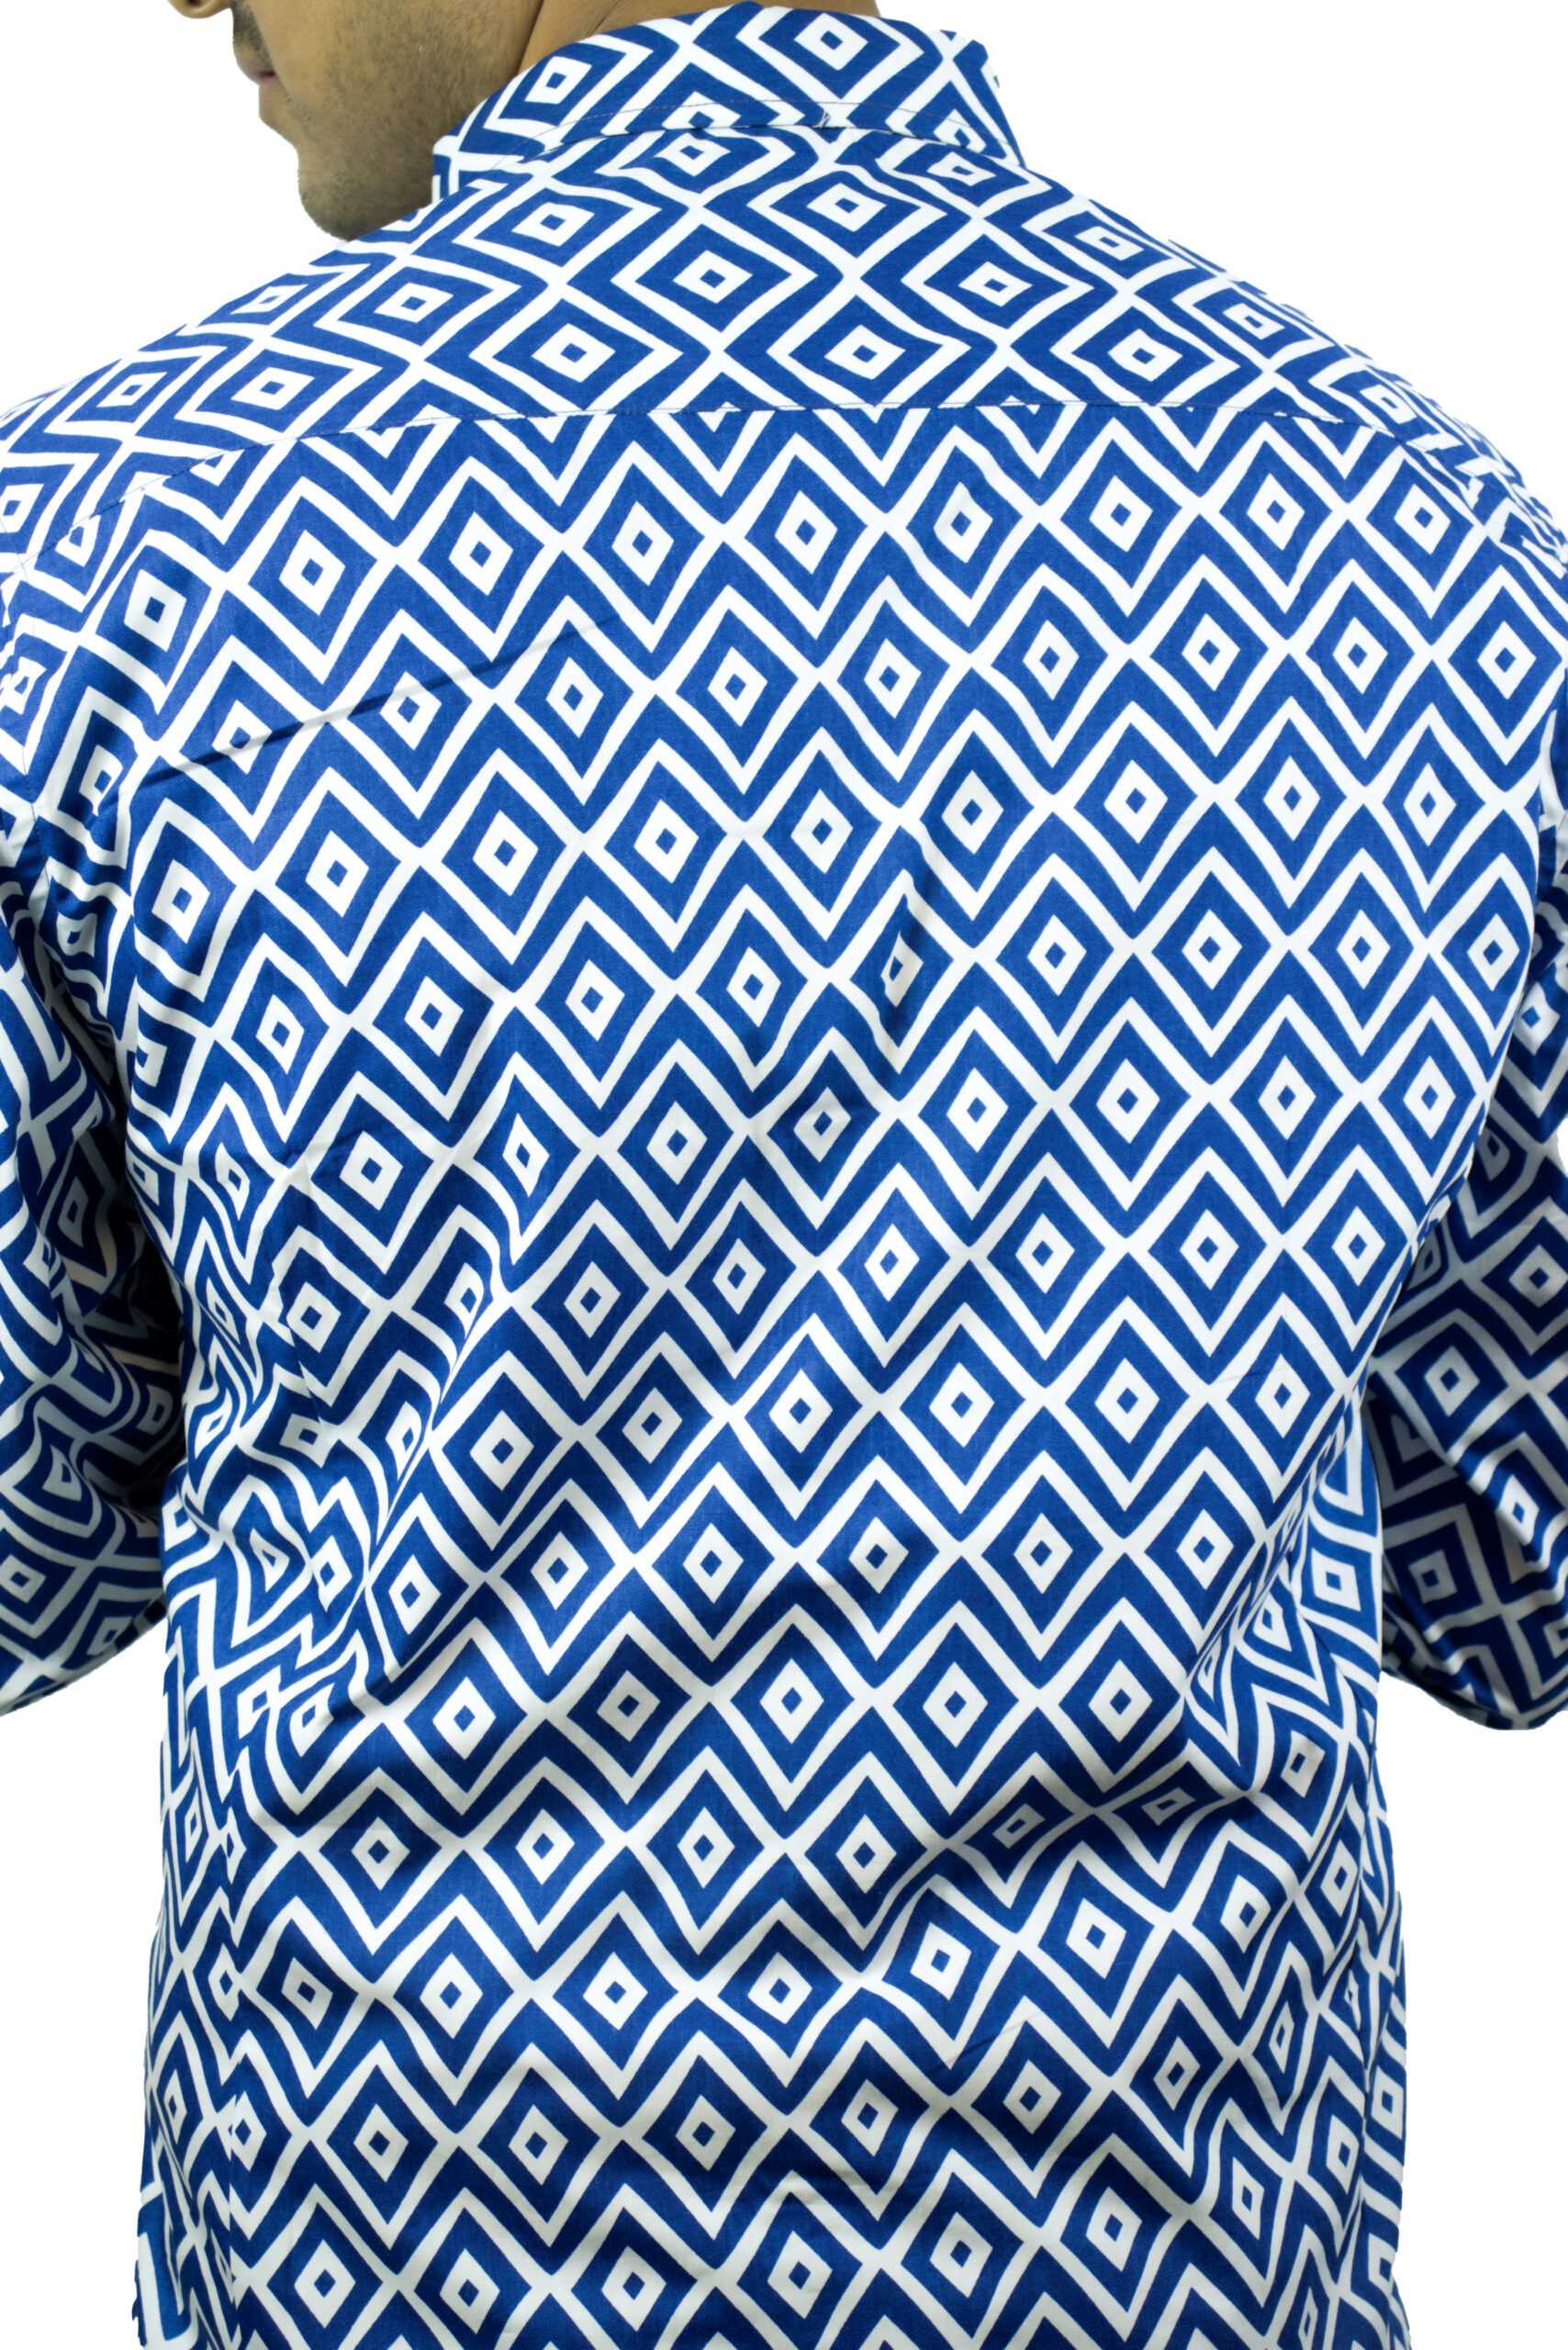 Stylish Printed Blue Shirt